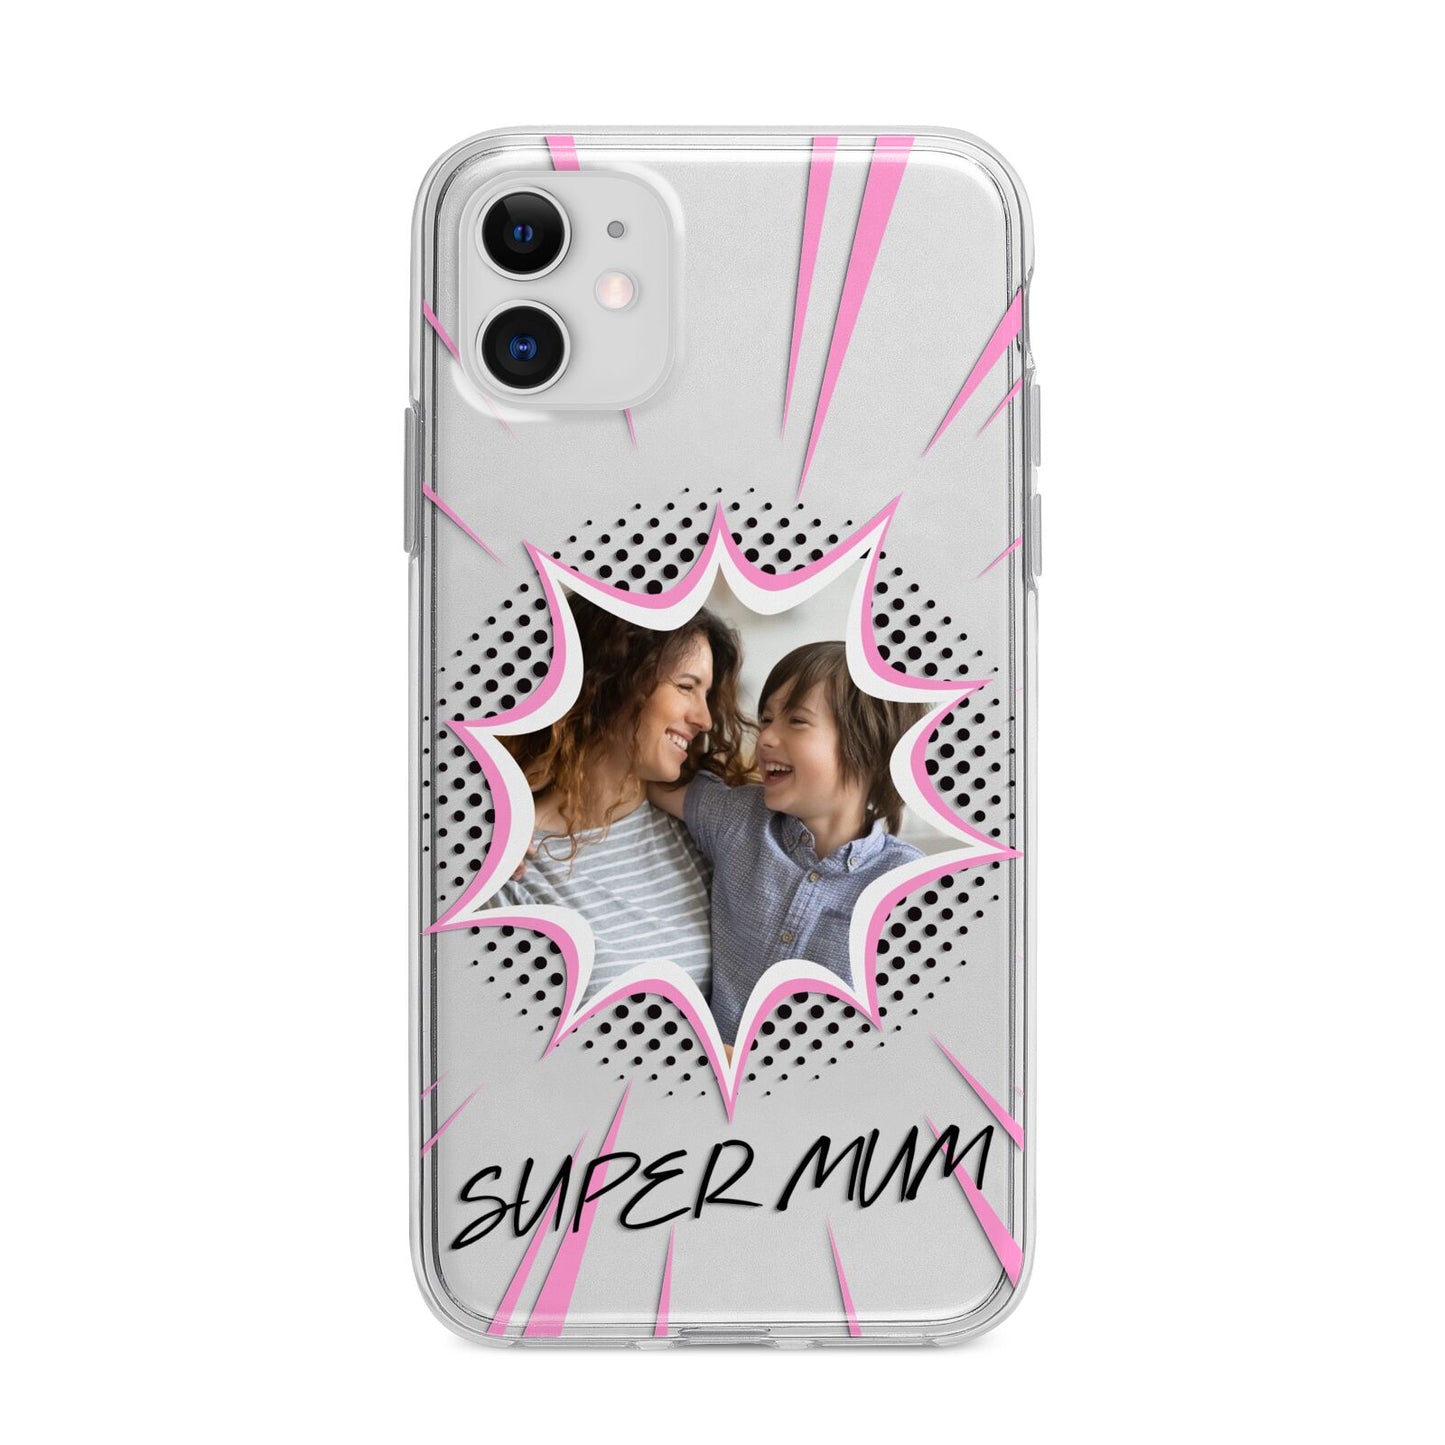 Super Mum Photo Apple iPhone 11 in White with Bumper Case